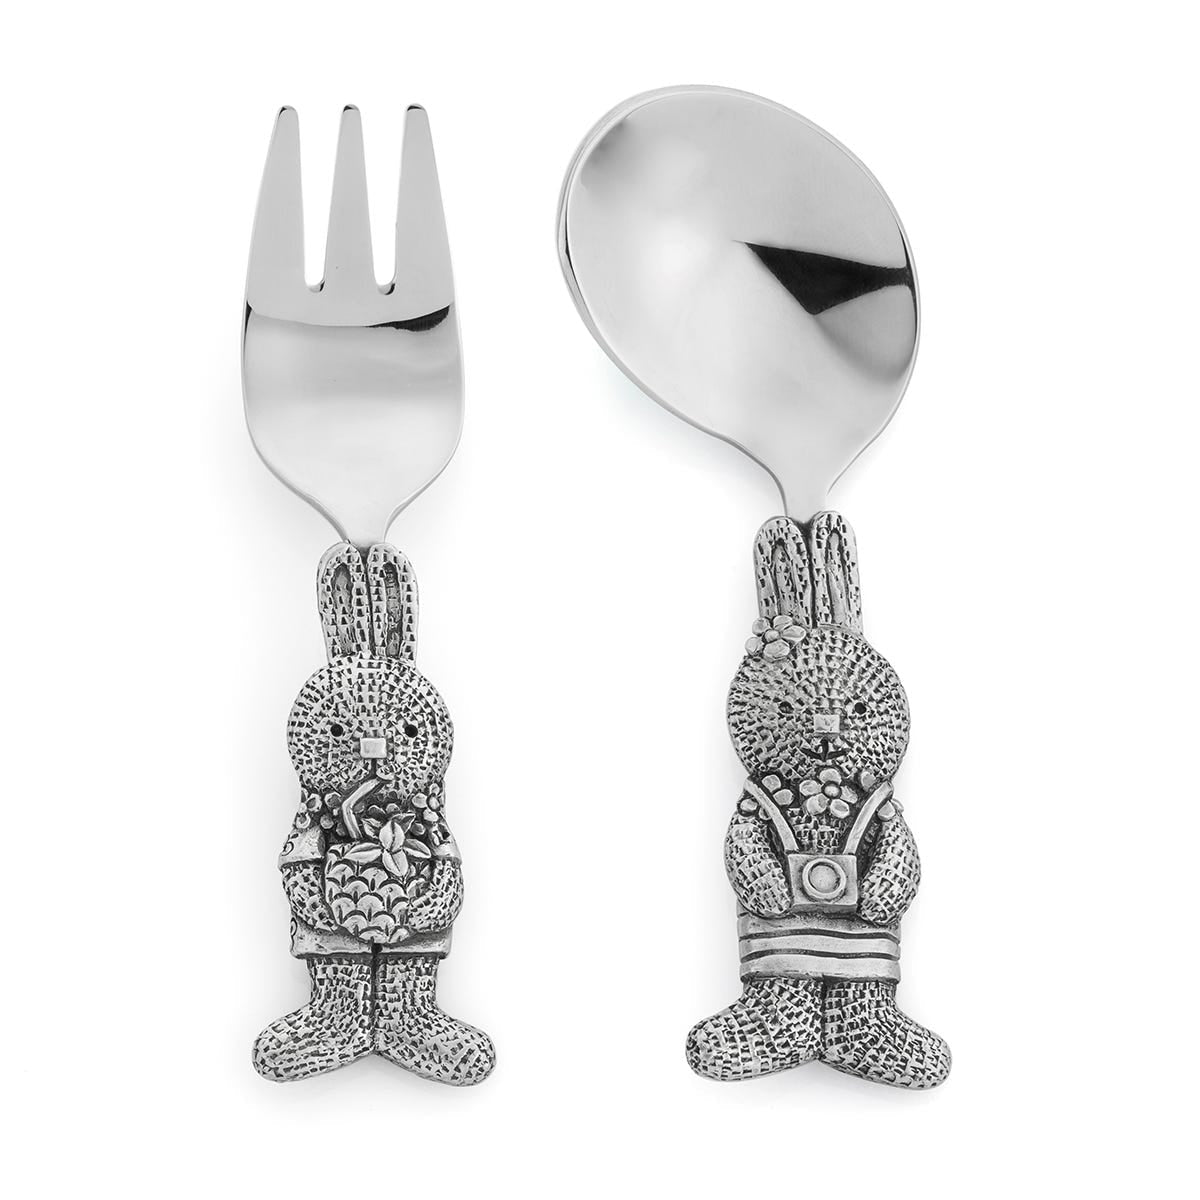 Royal Selangor Aloha Fork & Spoon Cutlery Set - Pewter - Notbrand